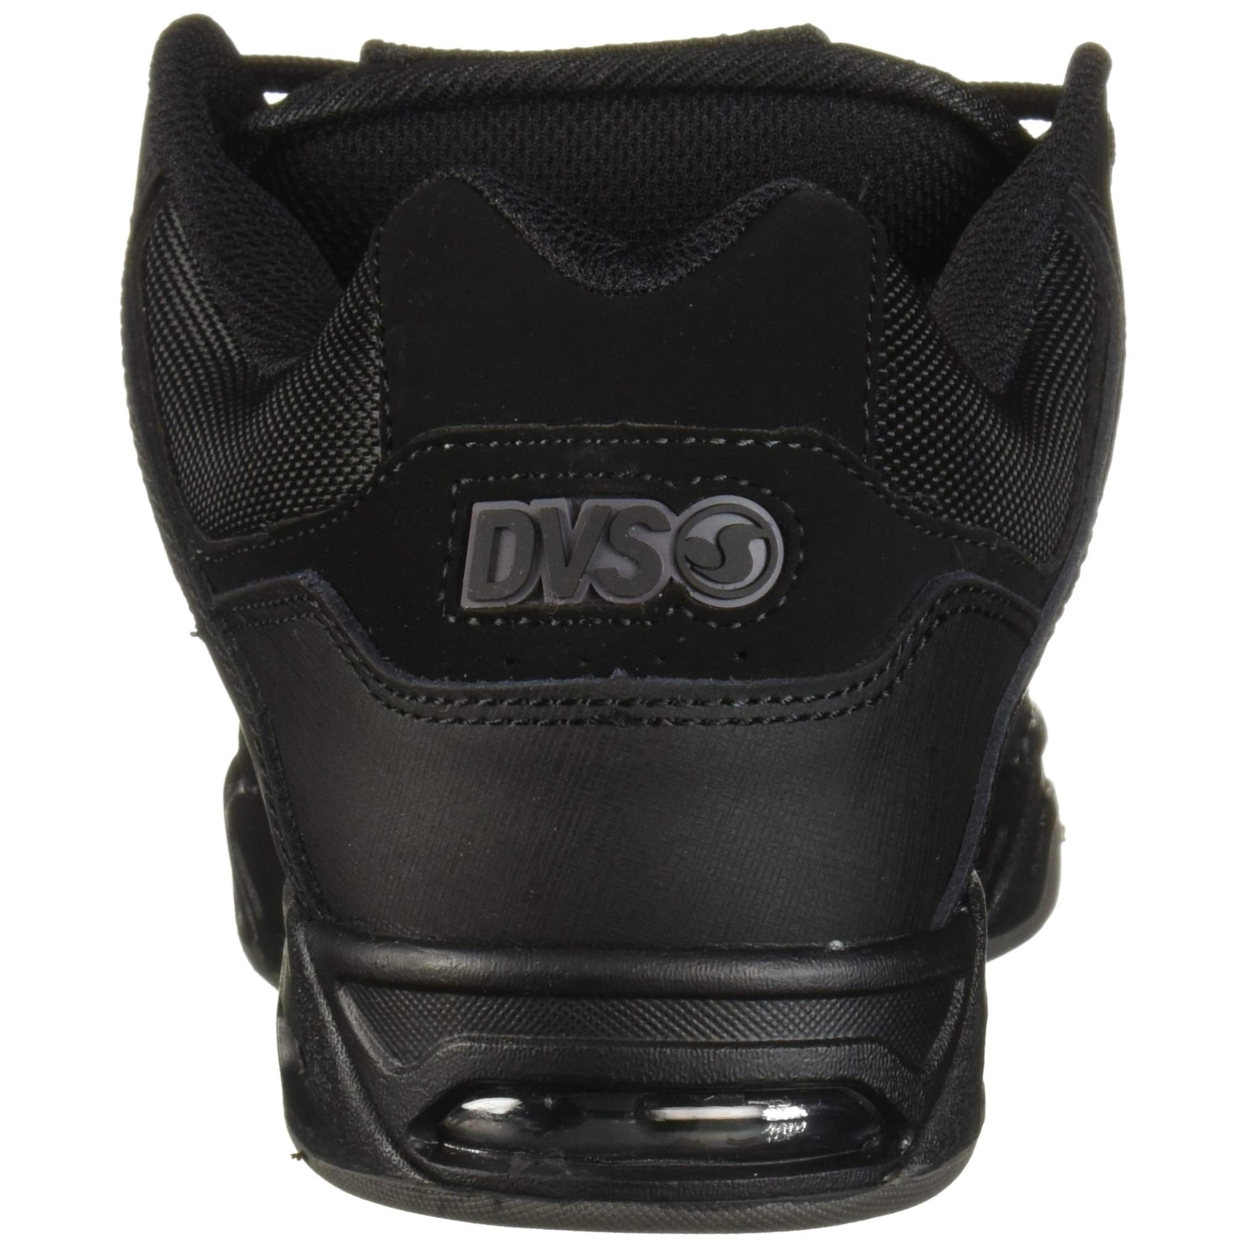 Dvs Footwear Mens Men's Enduro HEIR Skate Shoe BLACK BLACK NUBUCK - BLACK BLACK NUBUCK, 11-M